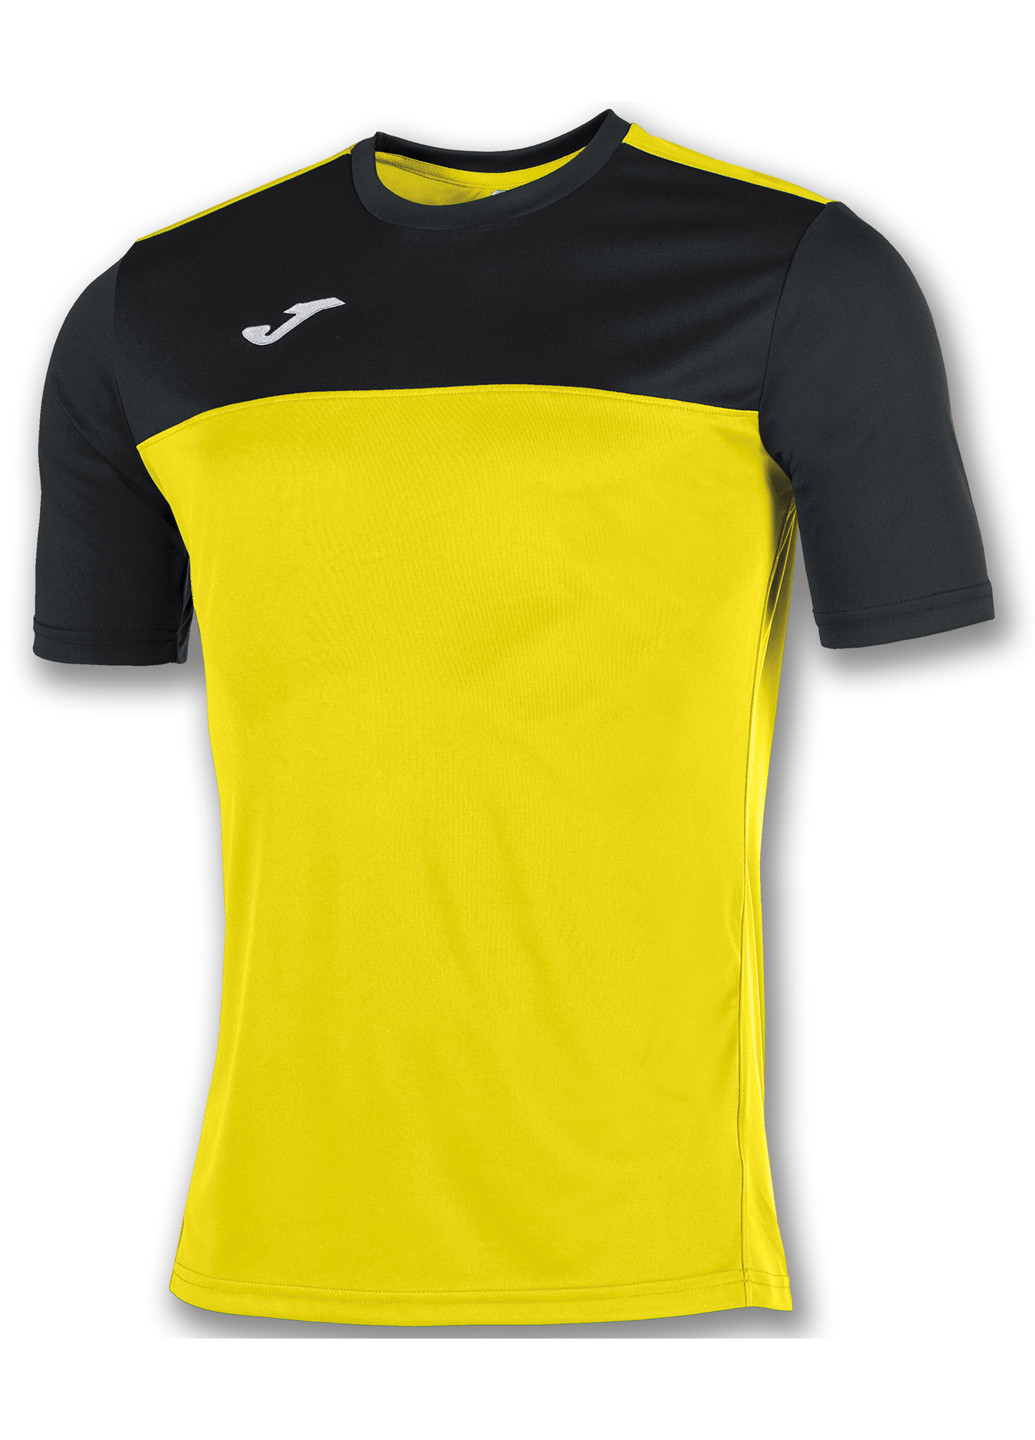 Желтая летняя футболка с коротким рукавом Joma